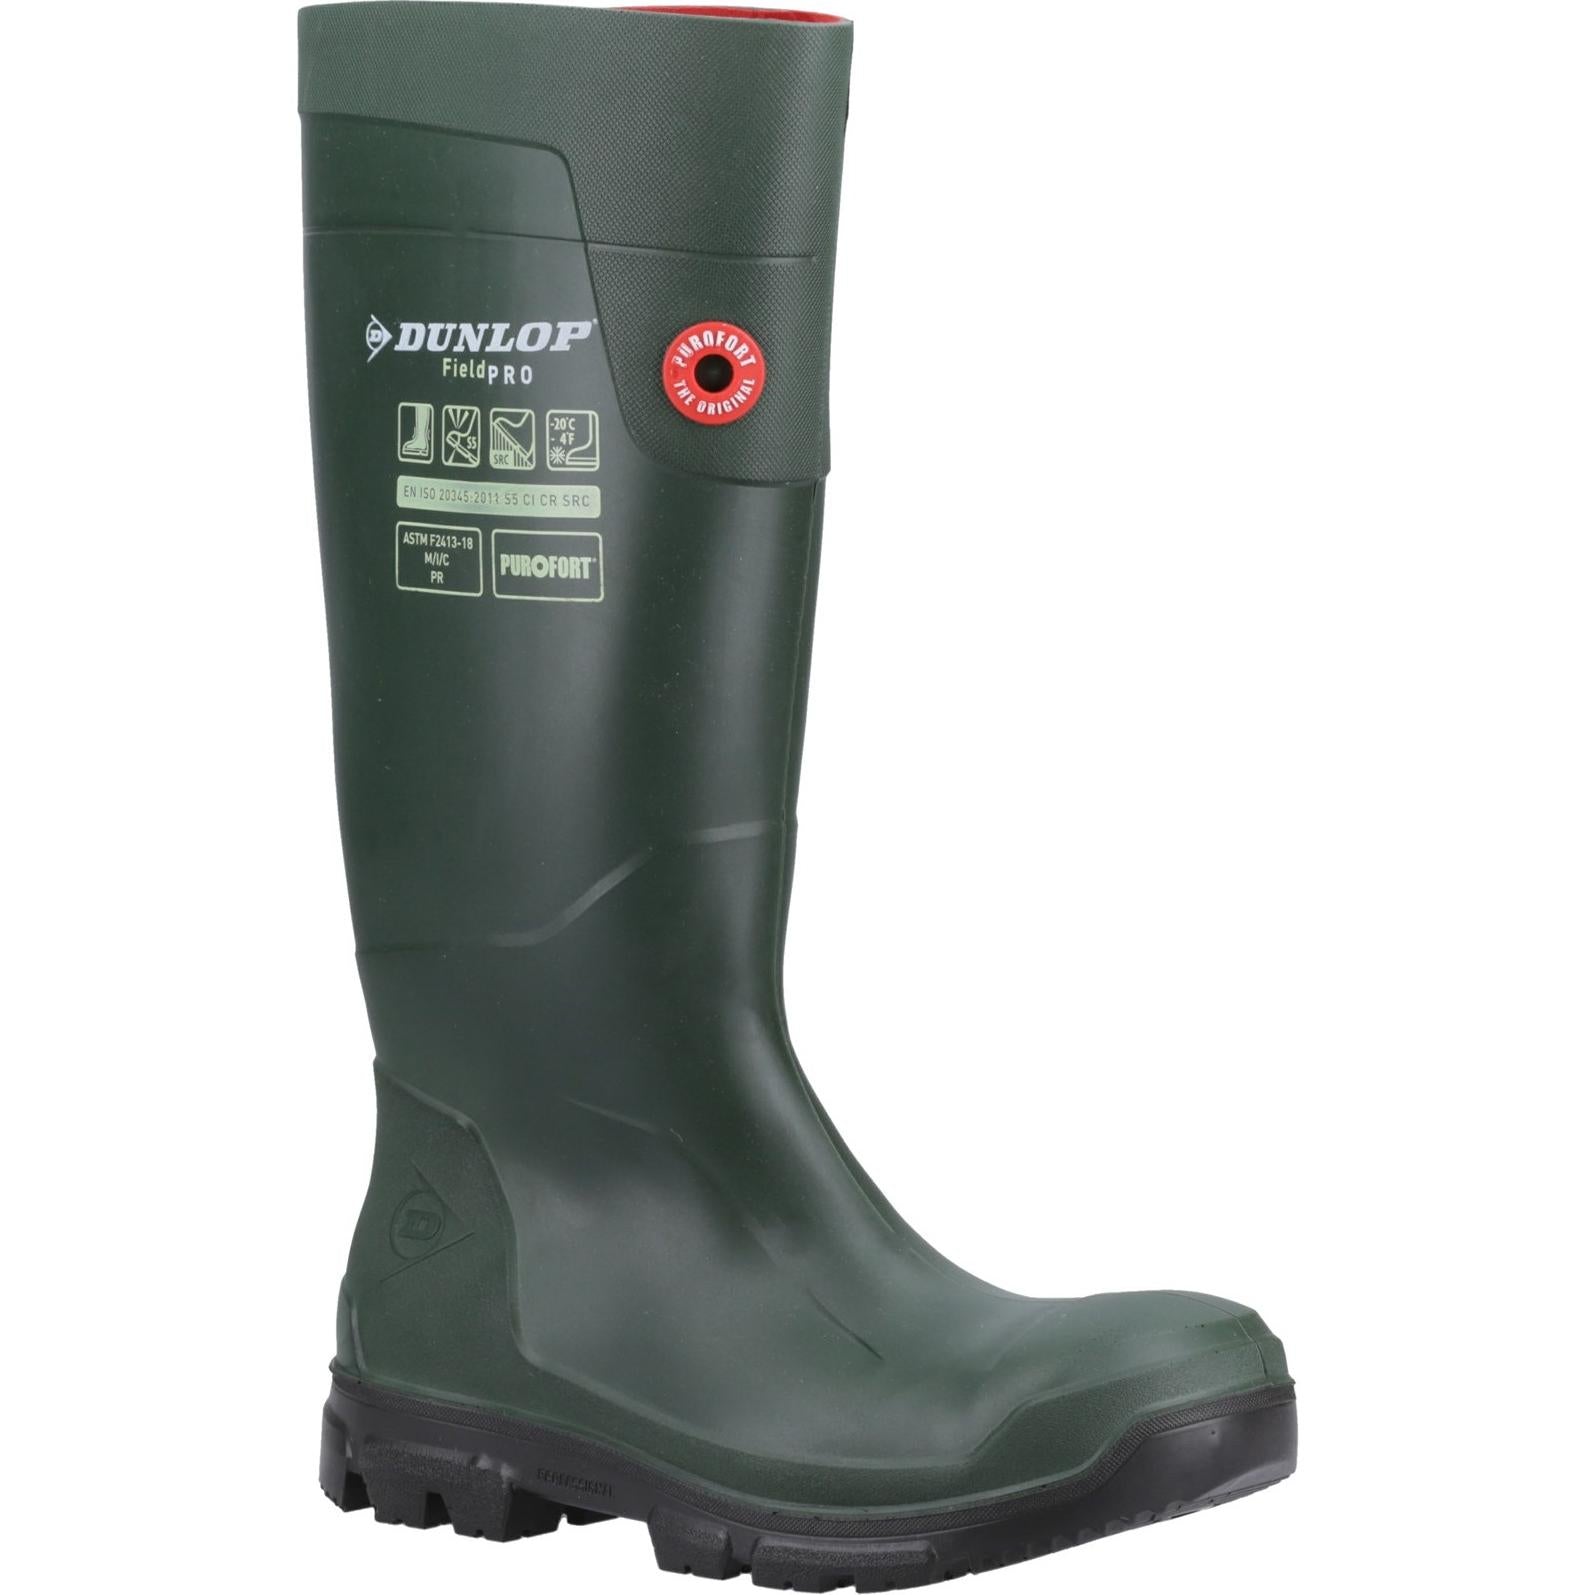 Dunlop FieldPro Full Safety Wellington Boots